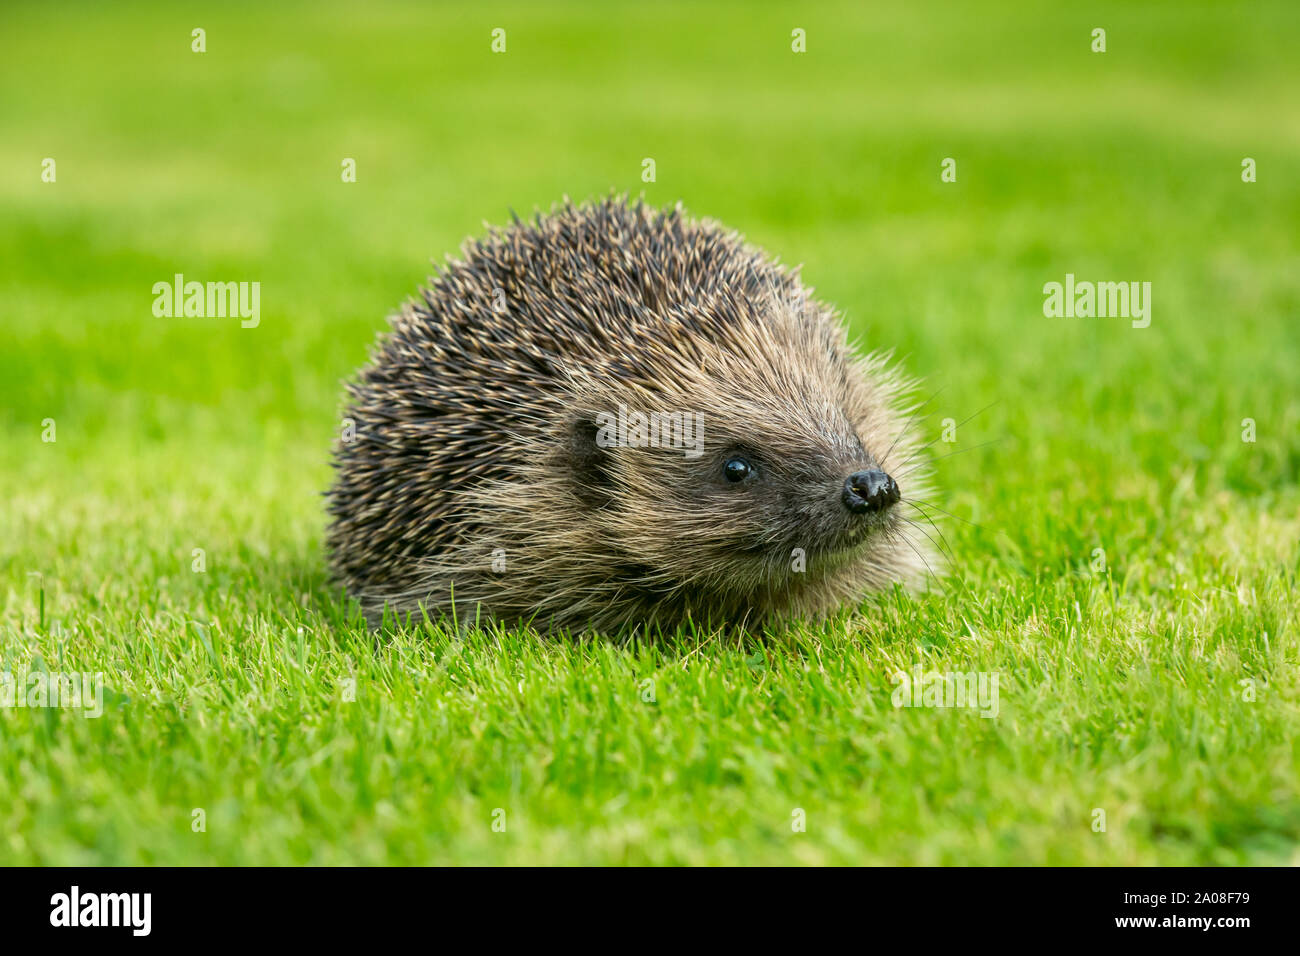 Hedgehog, (Scientific name: Erinaceus europaeus) Native, wild European hedgehog Facing right on green grass lawn. Head raised. Close up. Landscape Stock Photo